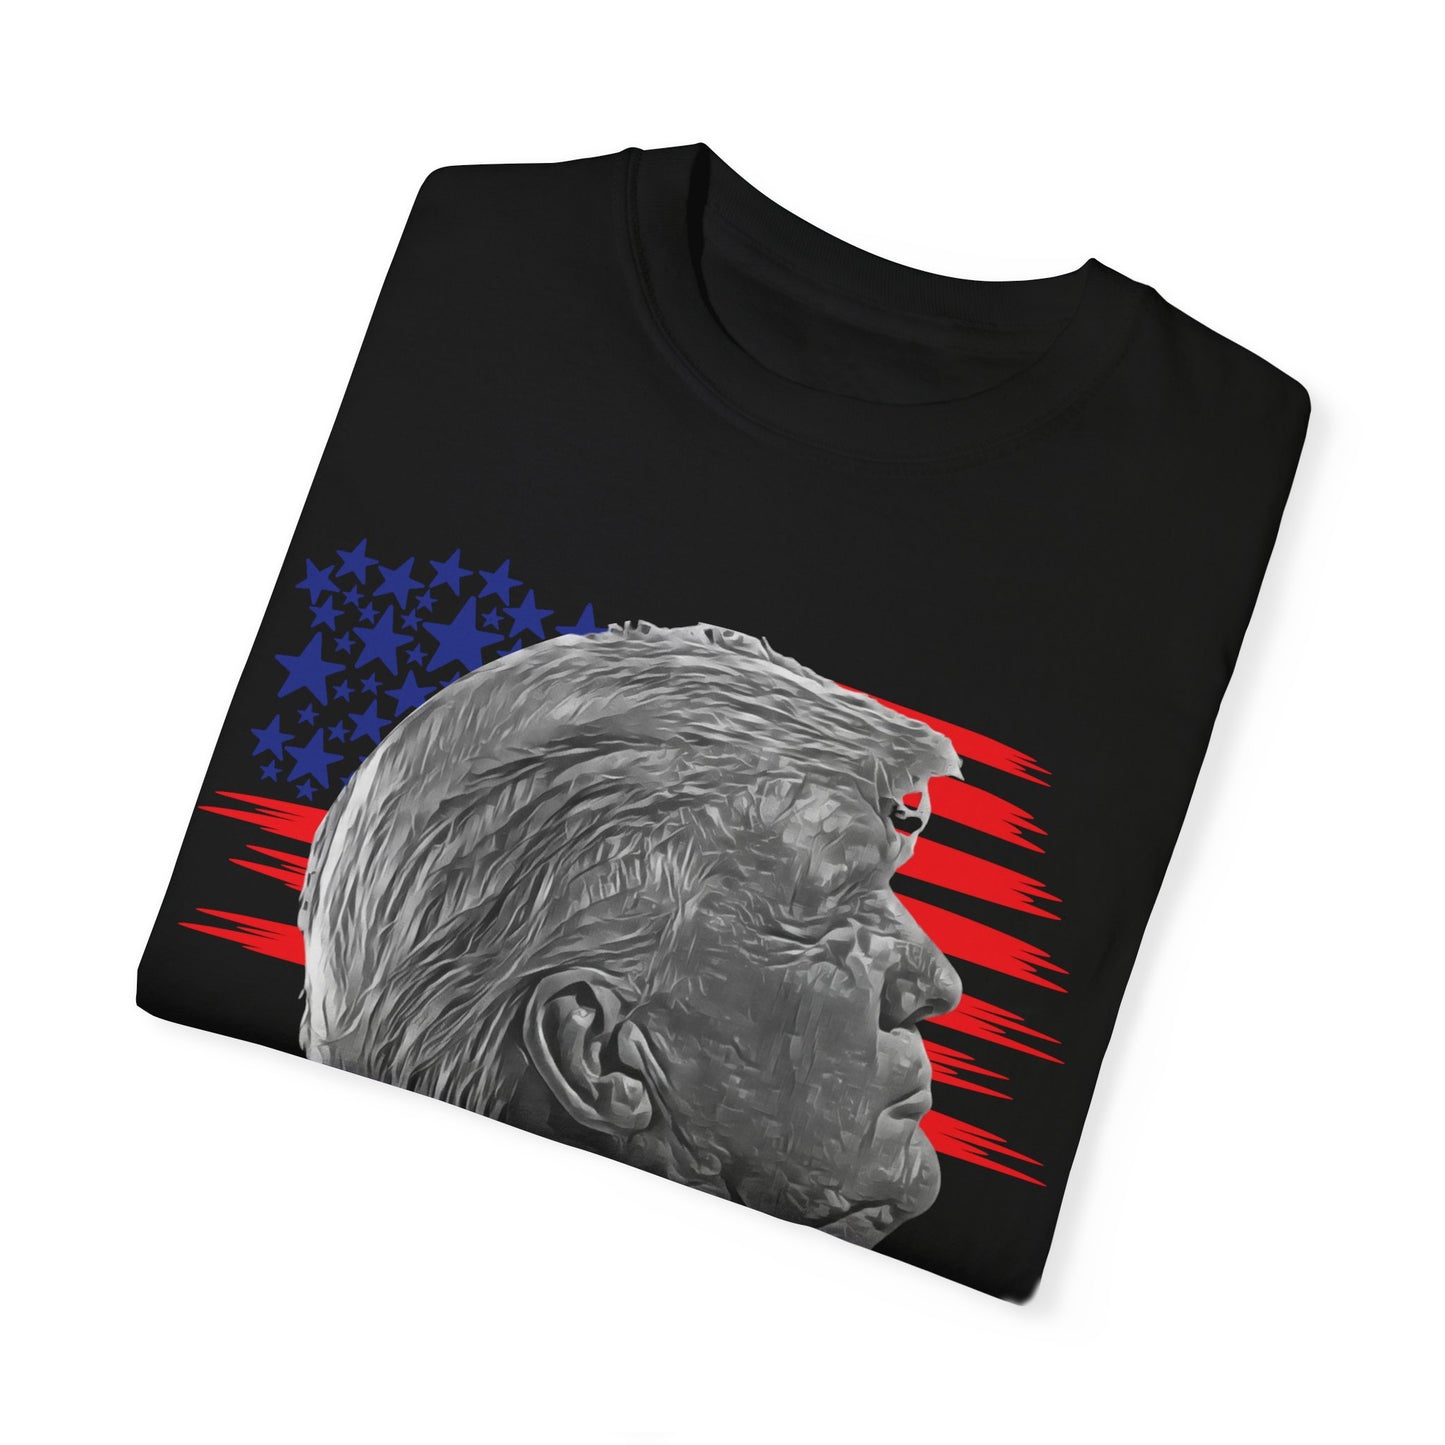 Bold & Vibrant: Trump 2024 Unisex T-shirt in Garment-Dyed Comfort